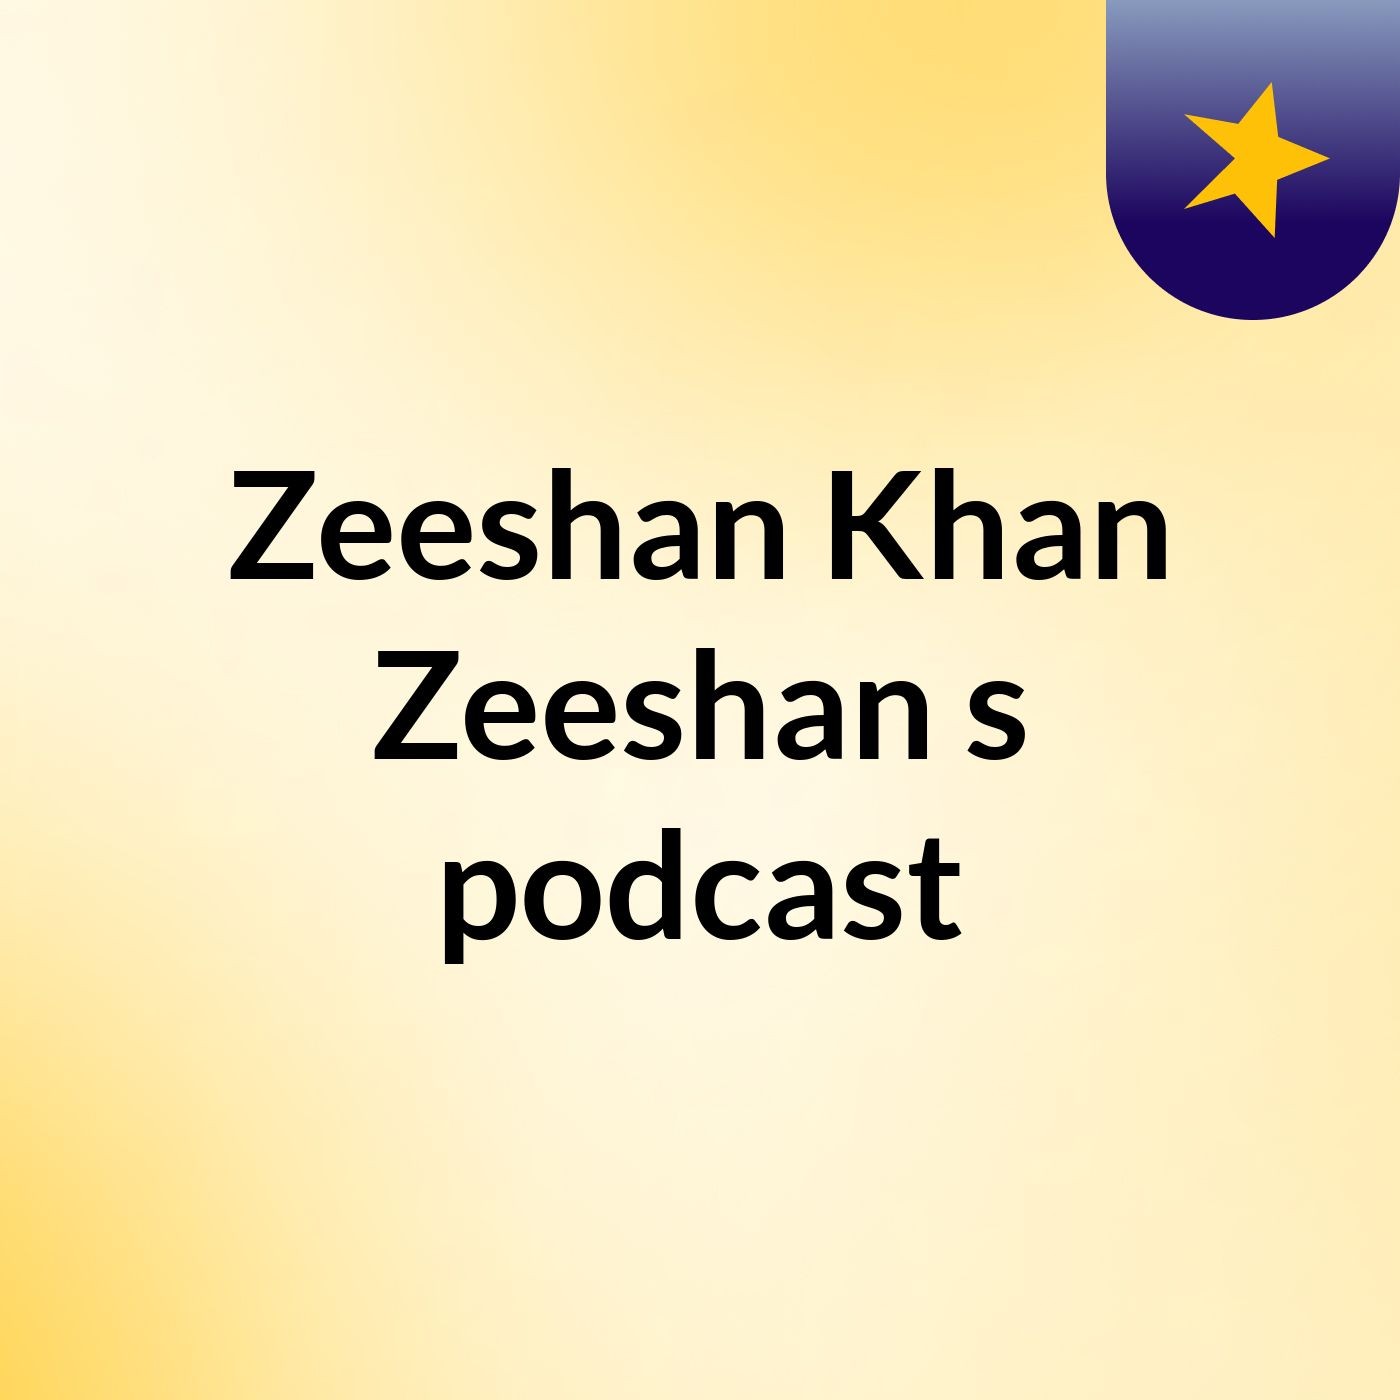 Episode 2 - Zeeshan Khan Zeeshan's podcast